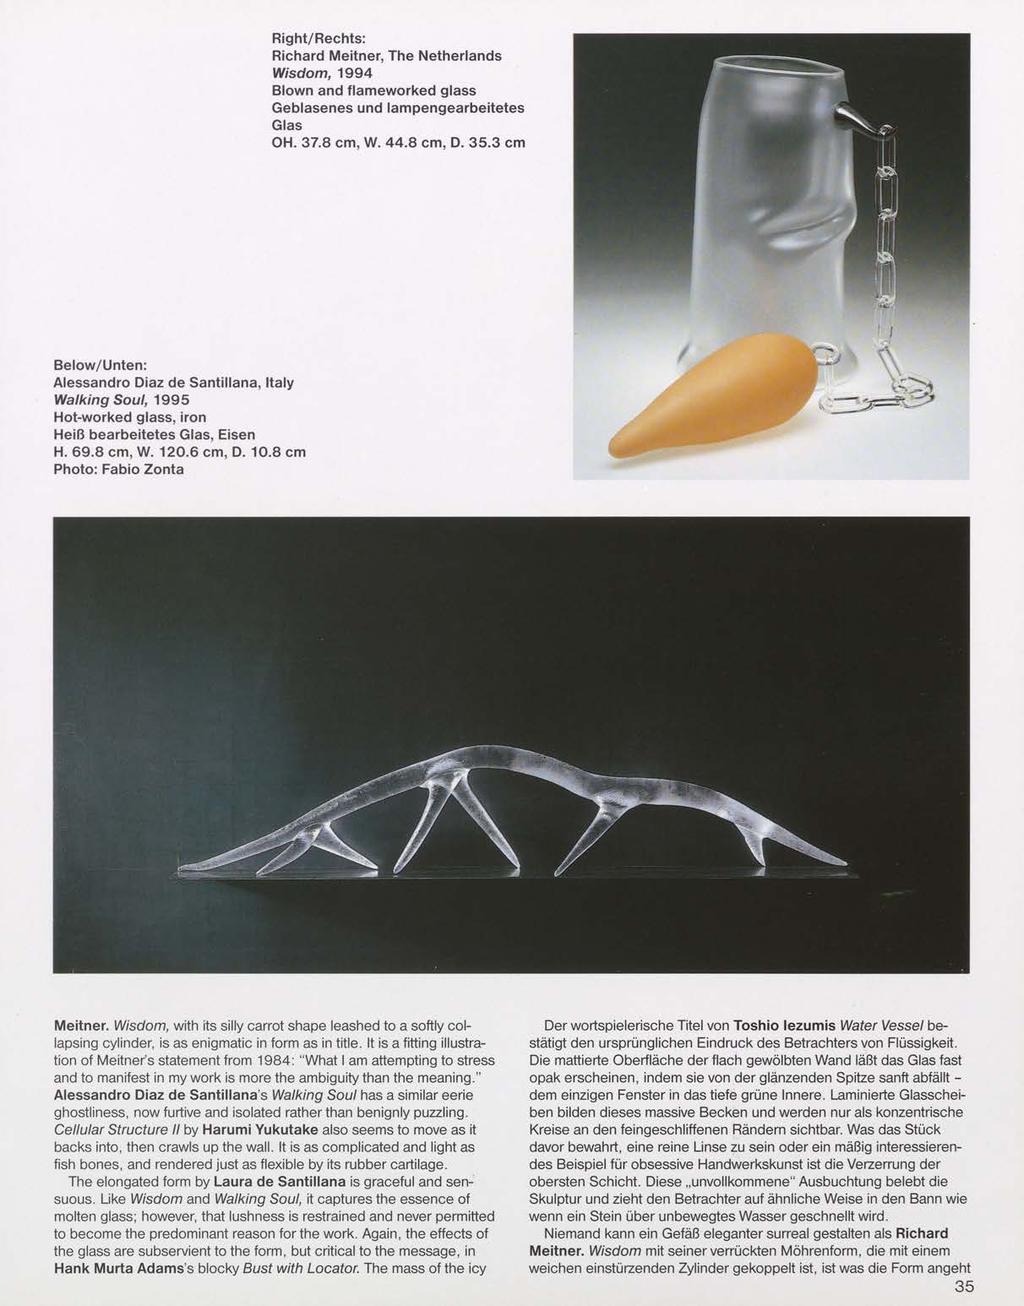 Right/Rechts: Richard Meitner, The Netherlands Wisdom, 1994 Blown and flameworked glass Geblasenes und lampengearbeitetes Glas OH. 37.8 cm, W. 44.8 cm, D. 35.